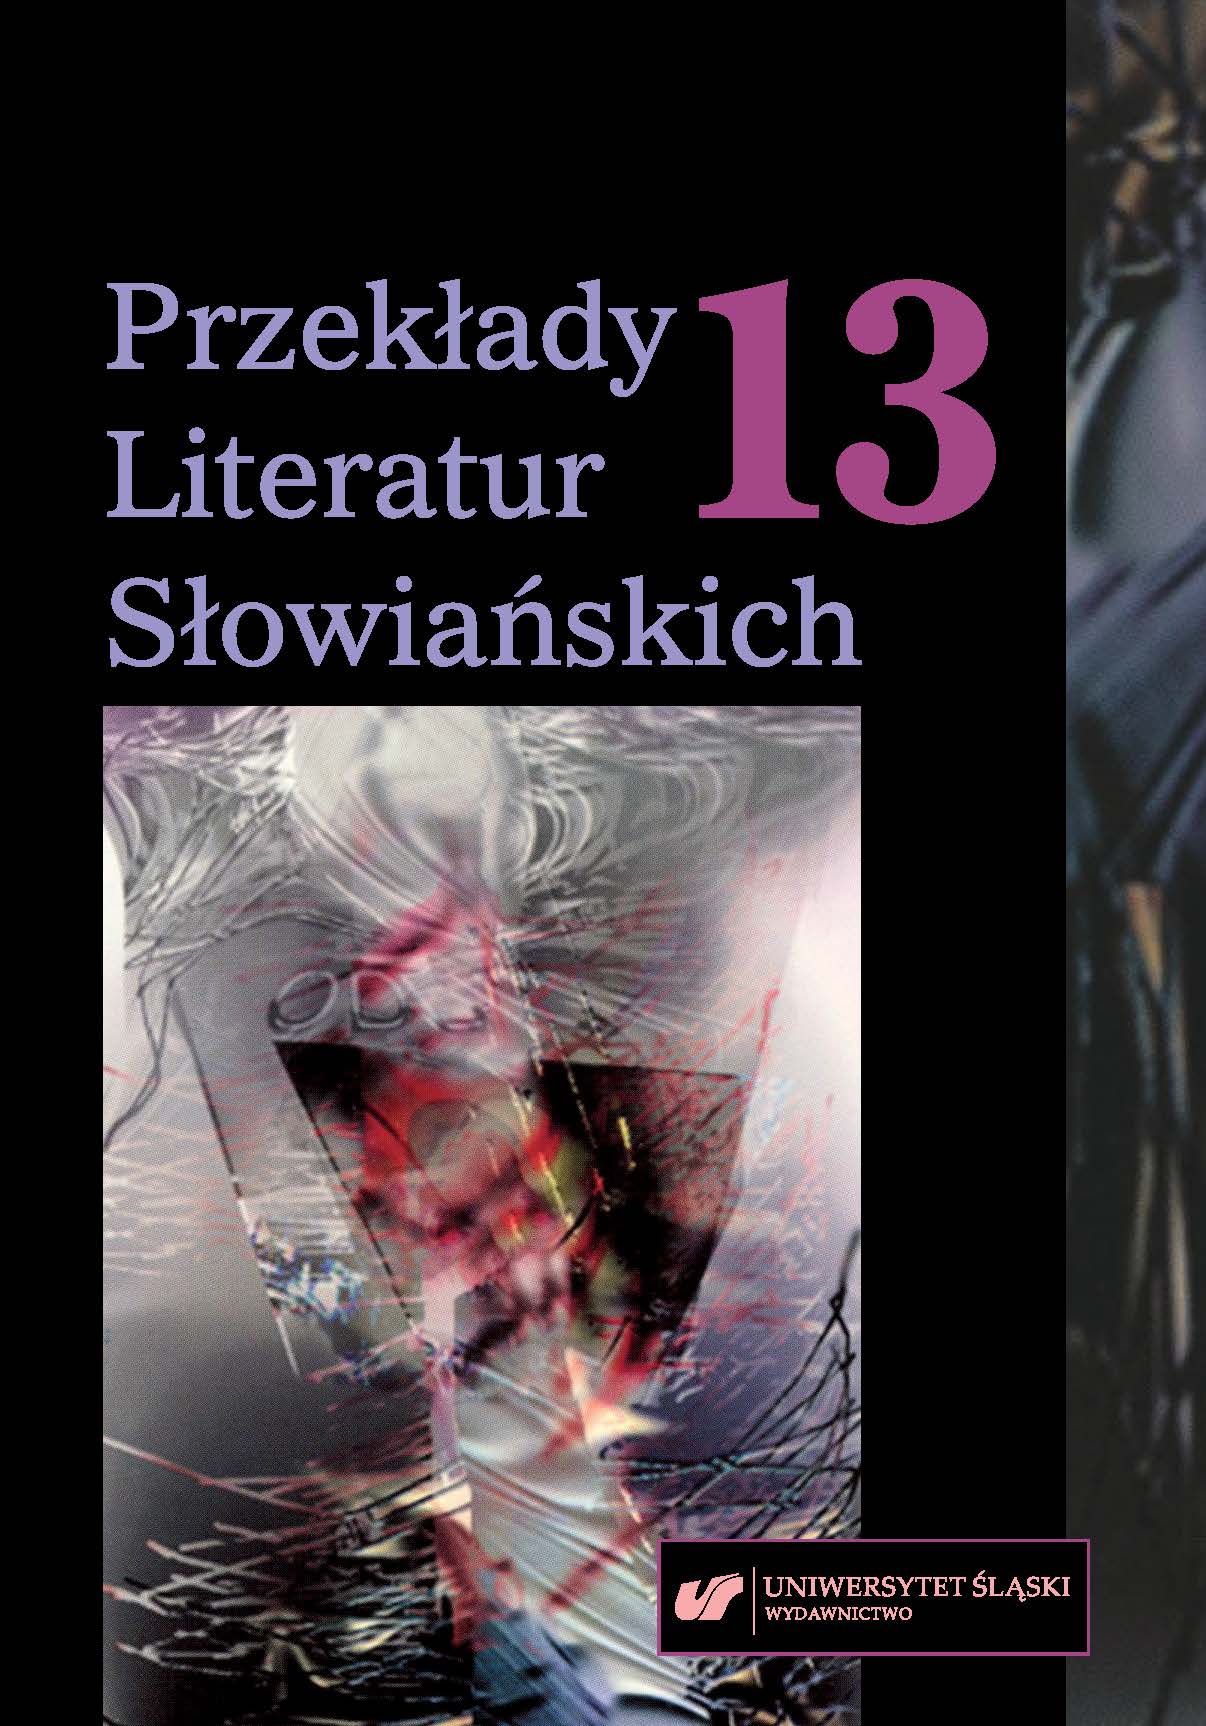 Dušan Karpatský and Czech-Croatian Literary Connections Cover Image